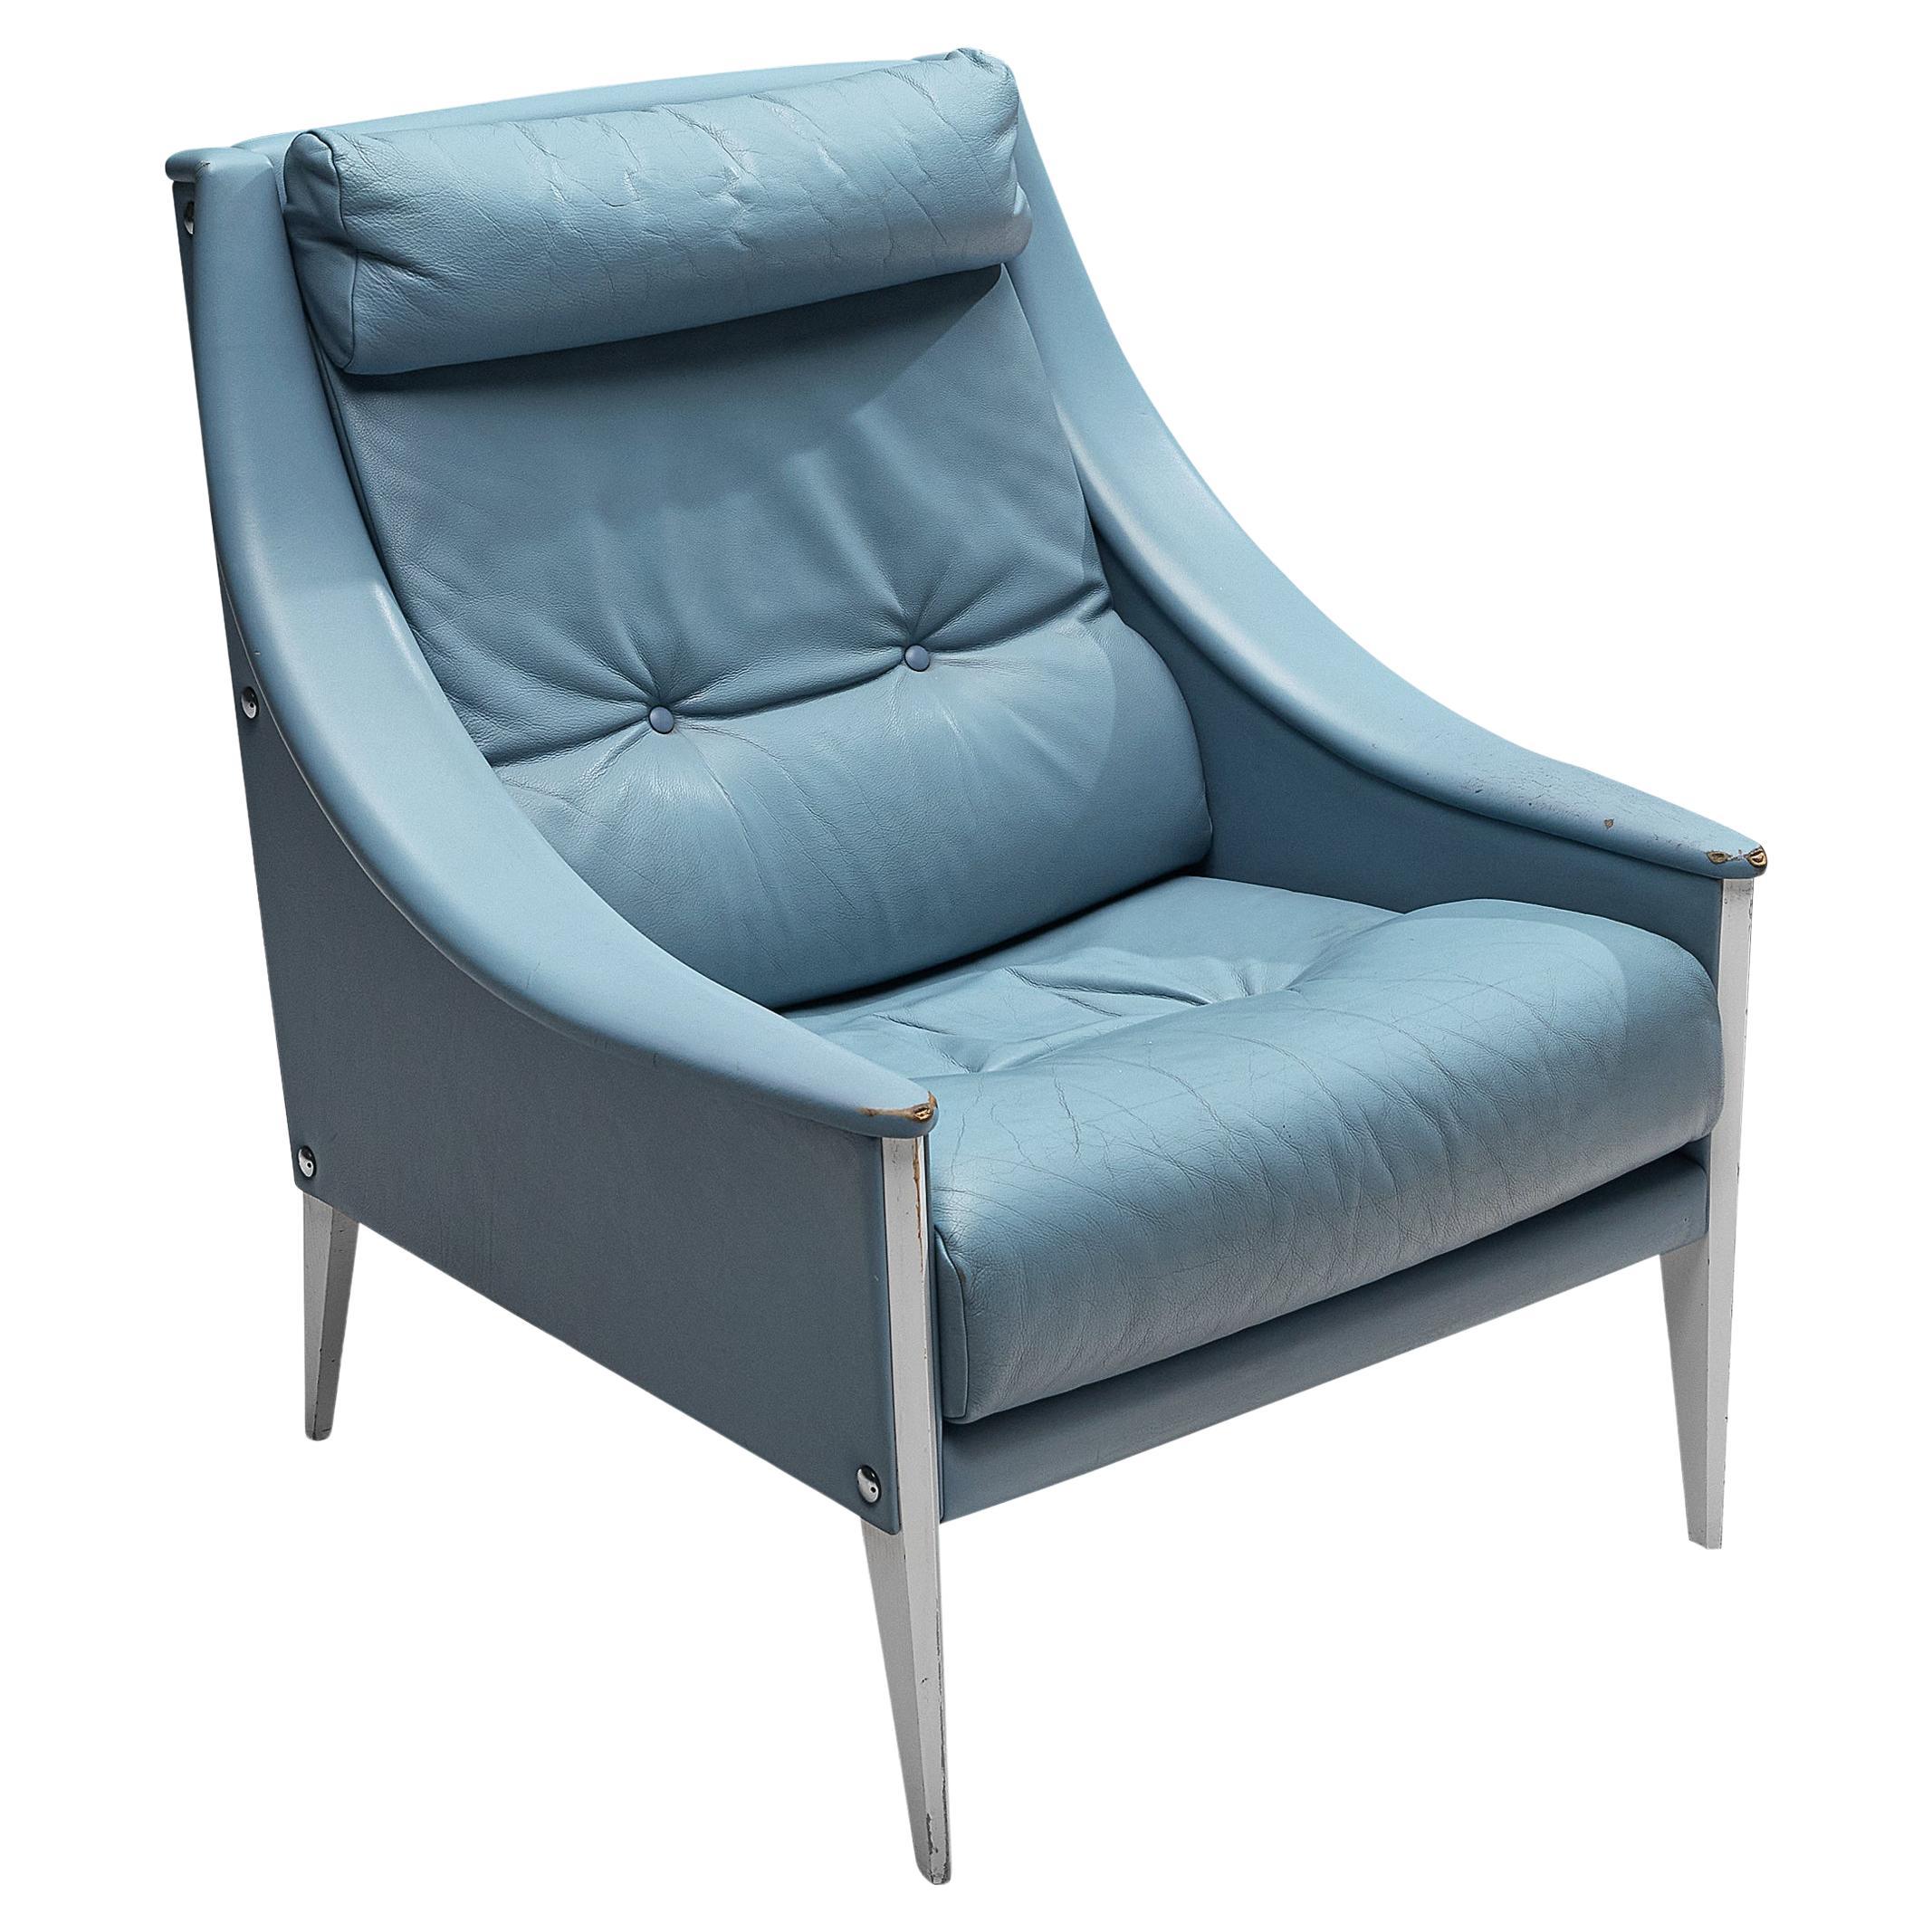 Gio Ponti fauteuil de salon 'Dezza' en cuir bleu clair pour Poltrona Frau en vente